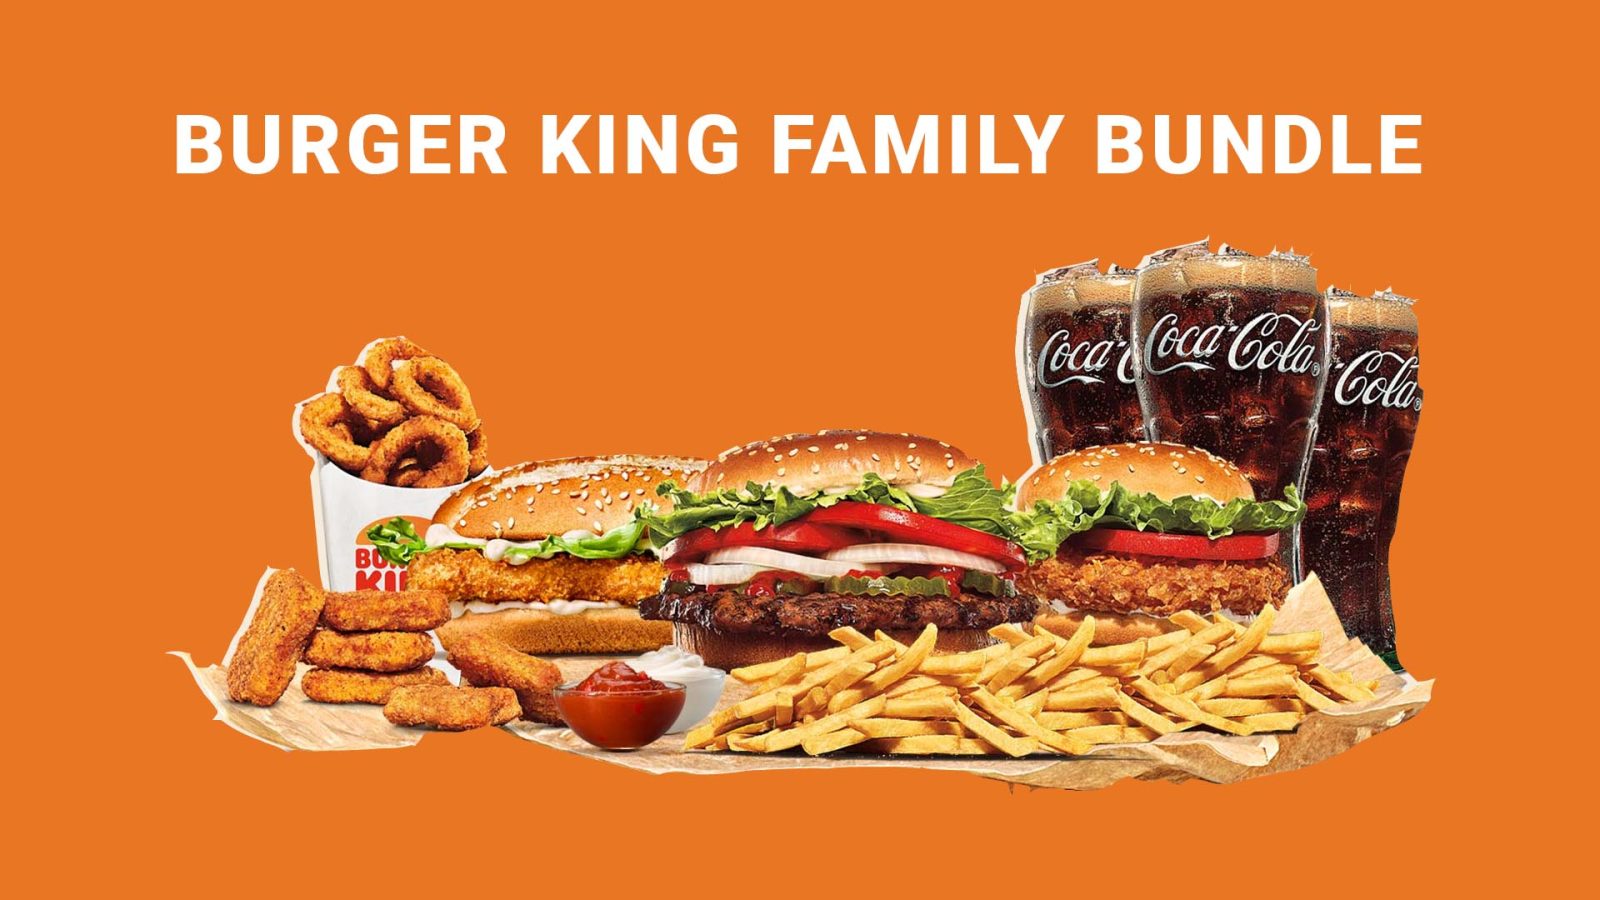 burger king family bundle, burger king family bundles,12.99 family bundle burger king,burger king family bundle price,burger king $20 family bundle, family bundle classic burger king price